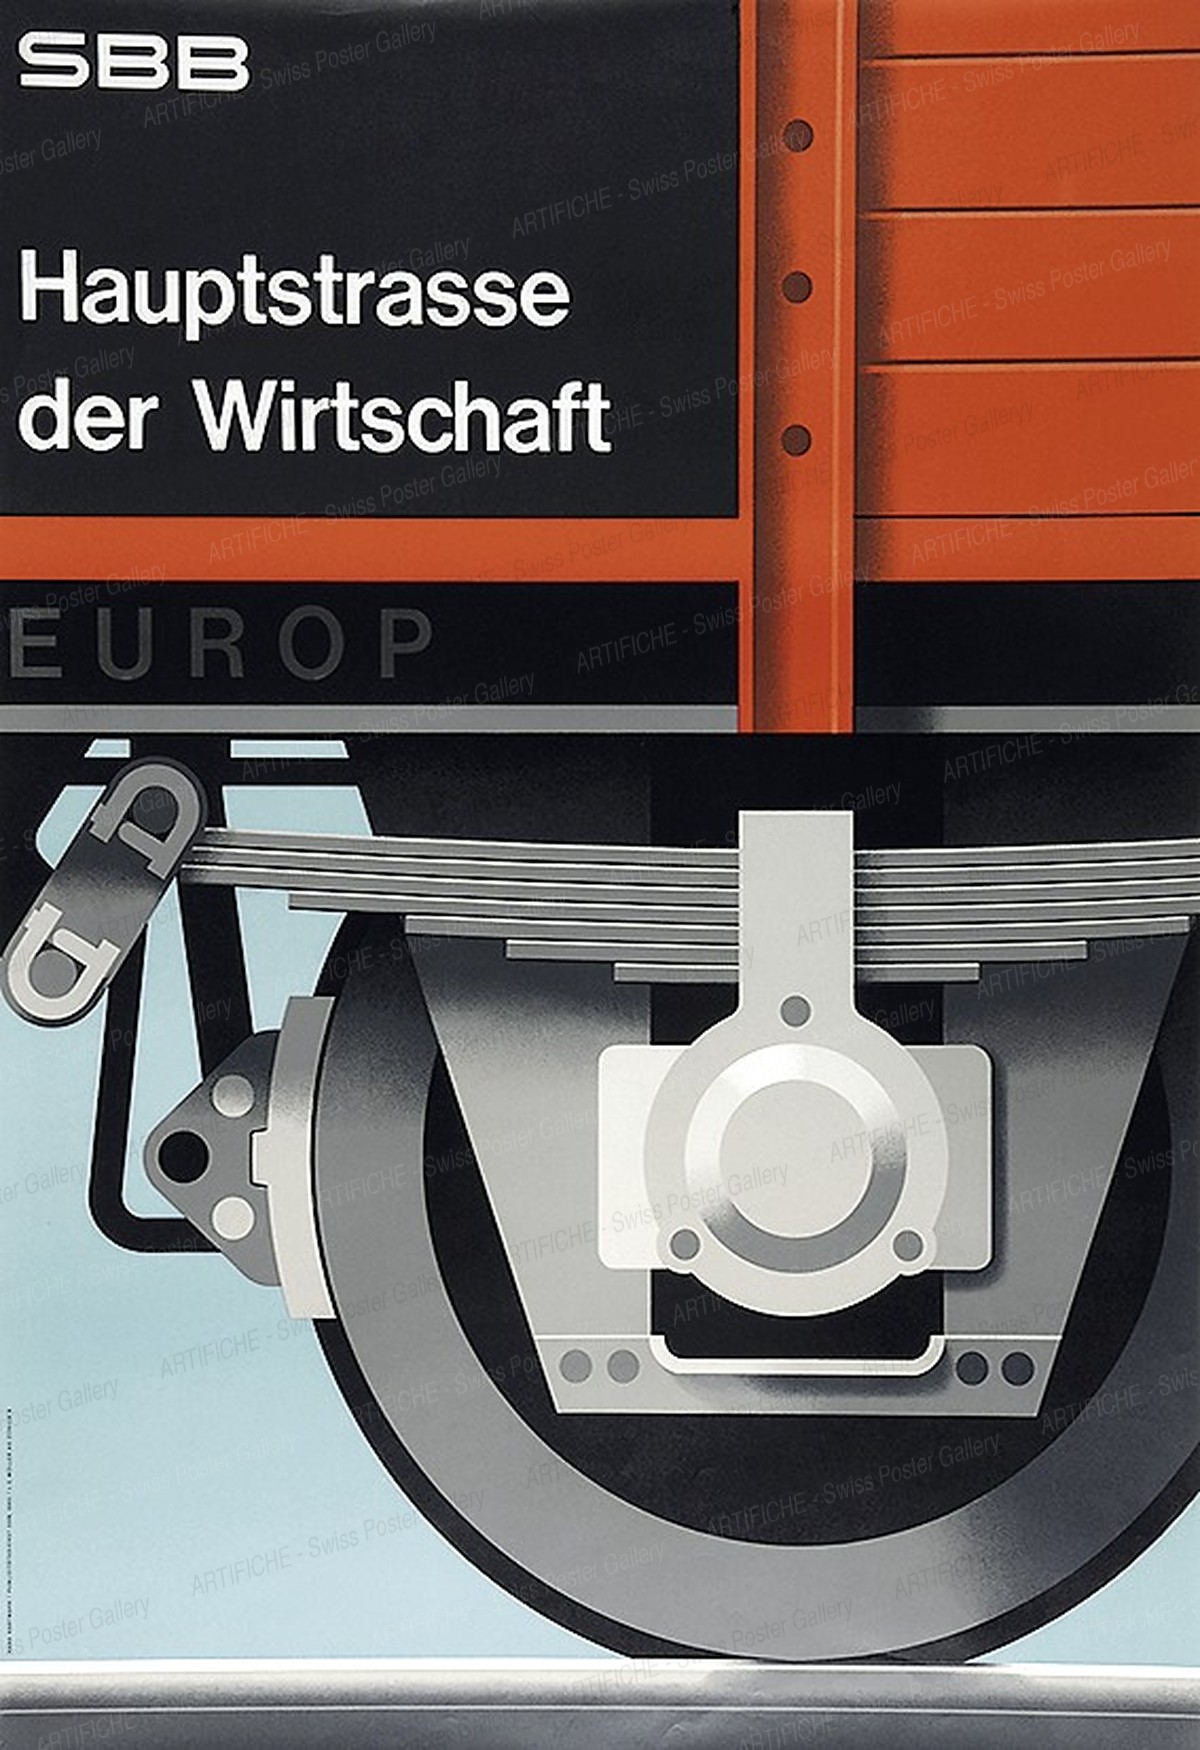 Swiss Federal Railways – main artery of the economy, Hans Hartmann